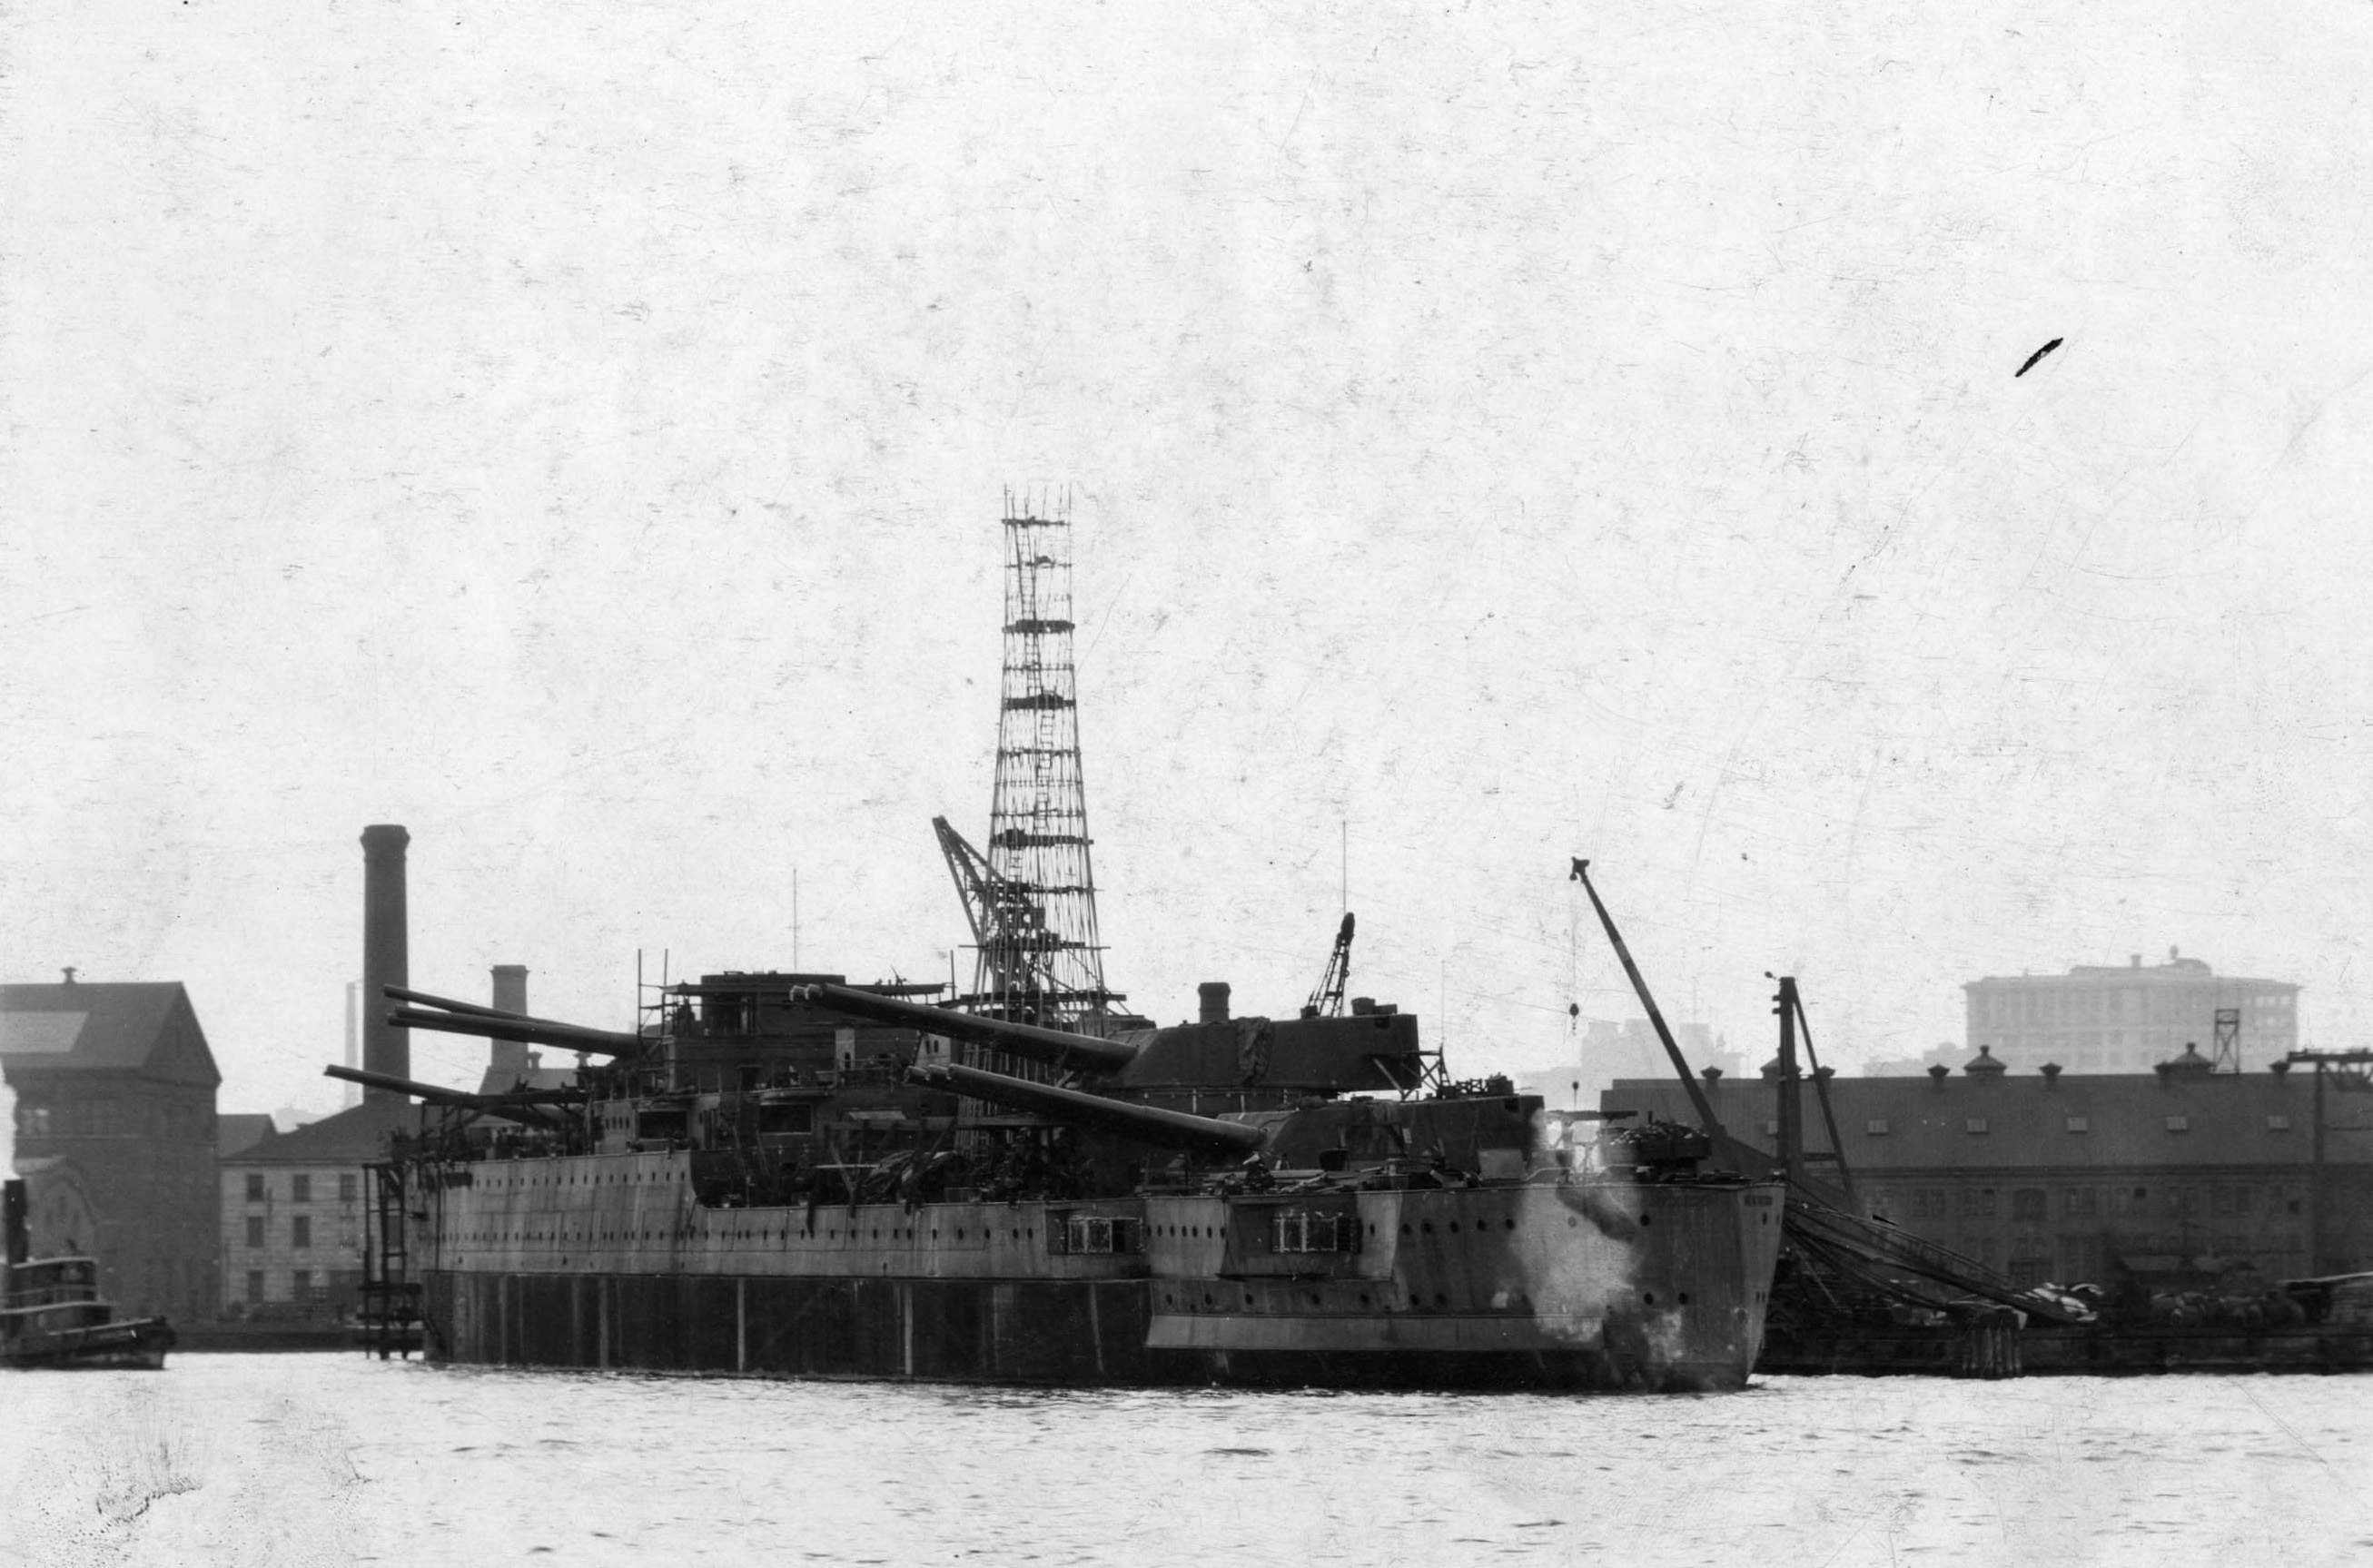 Equipping battleship New Mexico, New York Navy Yard, Brooklyn, New York, United States, 6 Oct 1917, photo 1 of 2